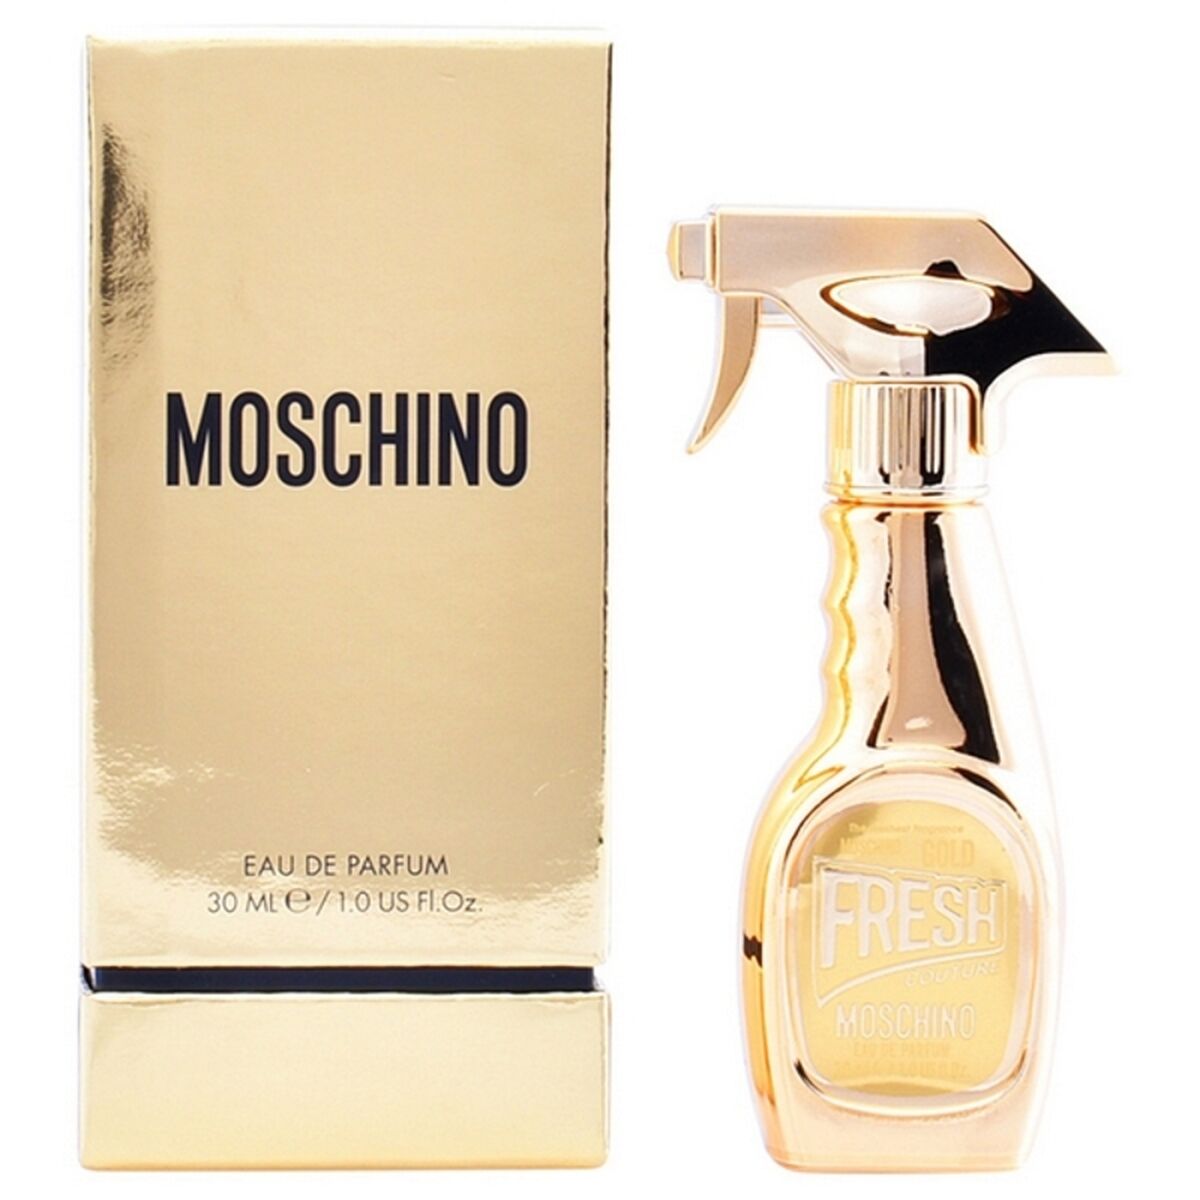 Parfum Femme Fresh Couture Gold Moschino EDP